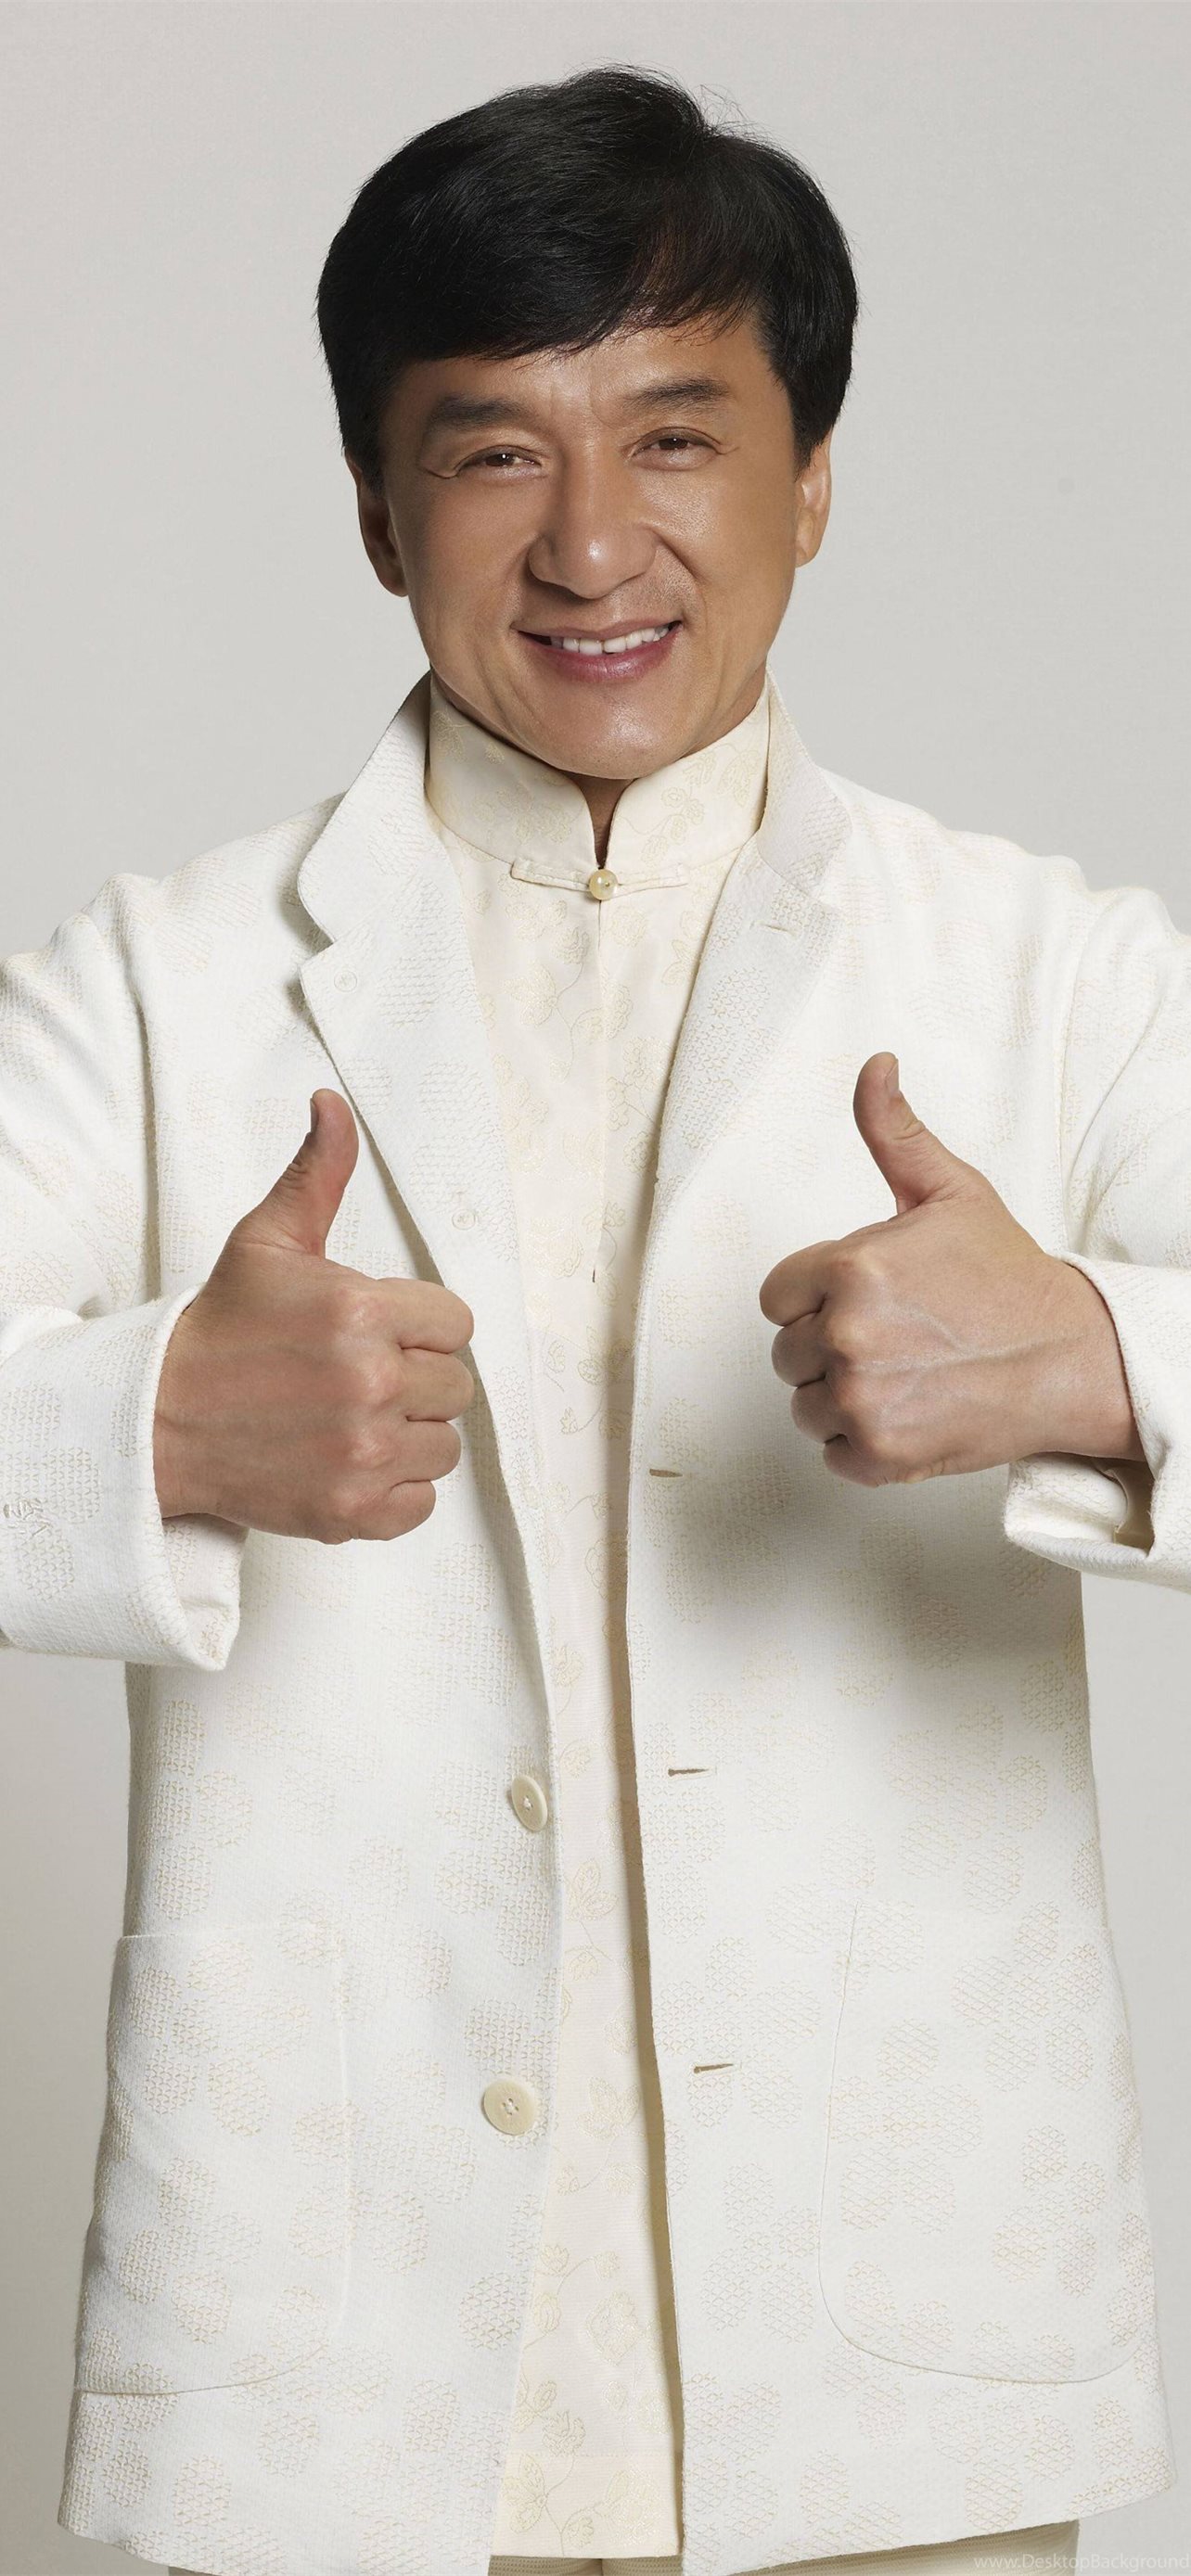 Jackie Chan HD Desktop Background iPhone Wallpapers Free Download